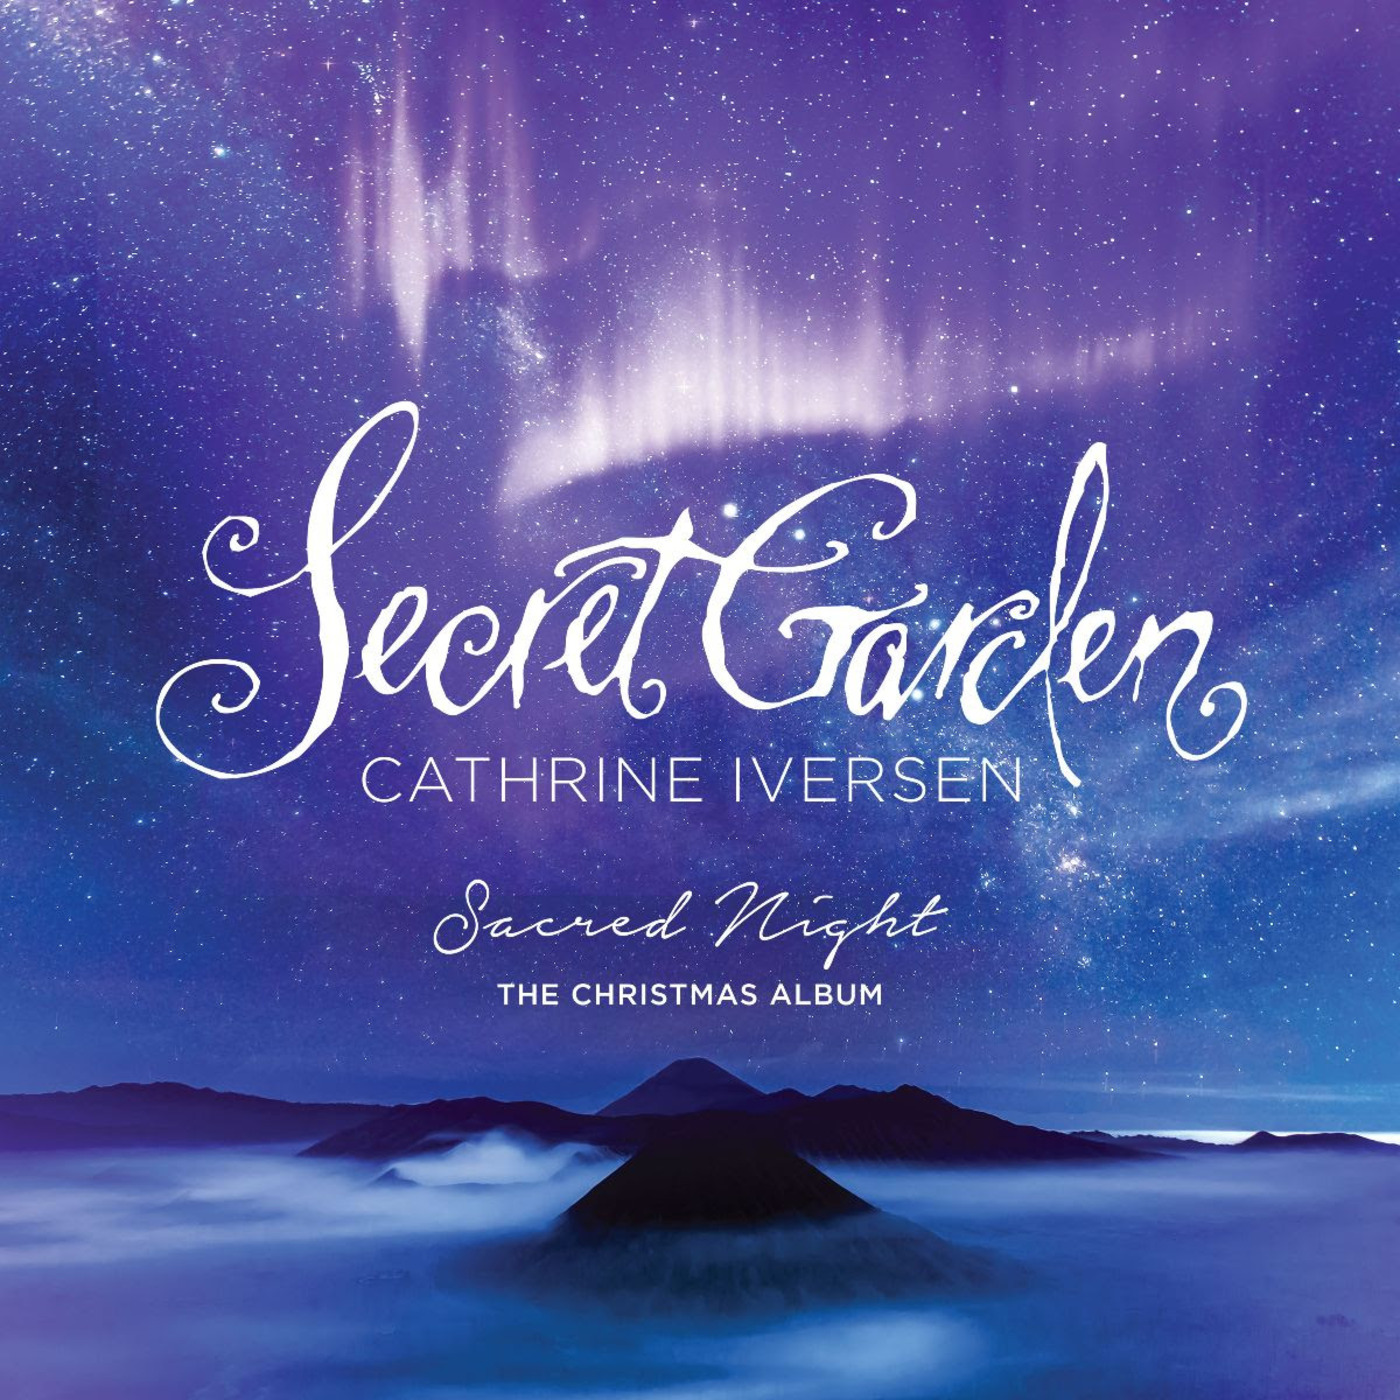 Episode 34: 18034 Secret Garden - Sacred Night - The Christmas Album